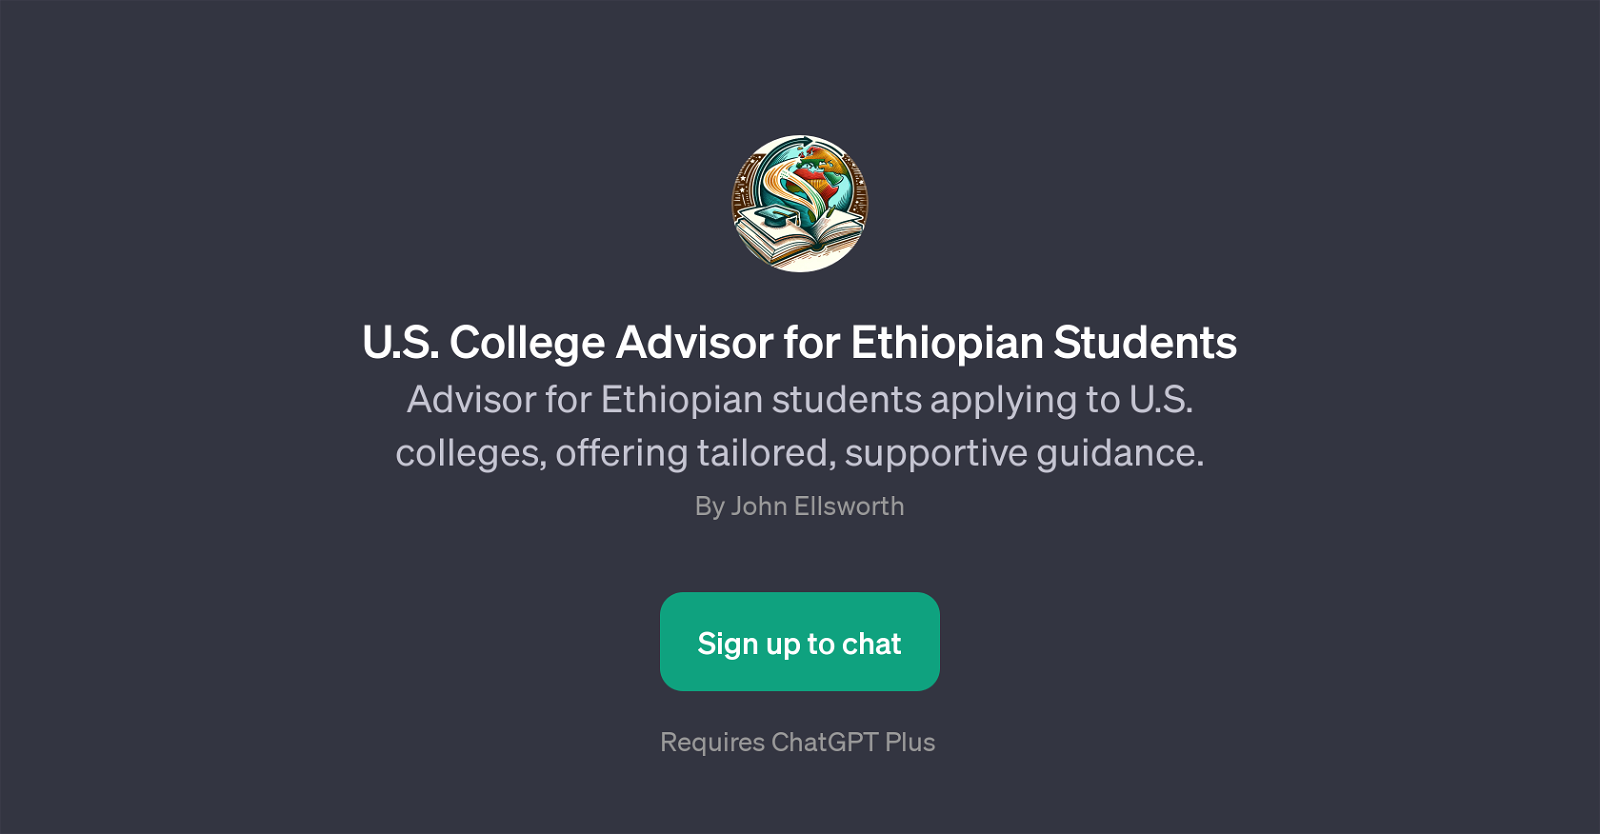 U.S. College Advisor for Ethiopian Students website